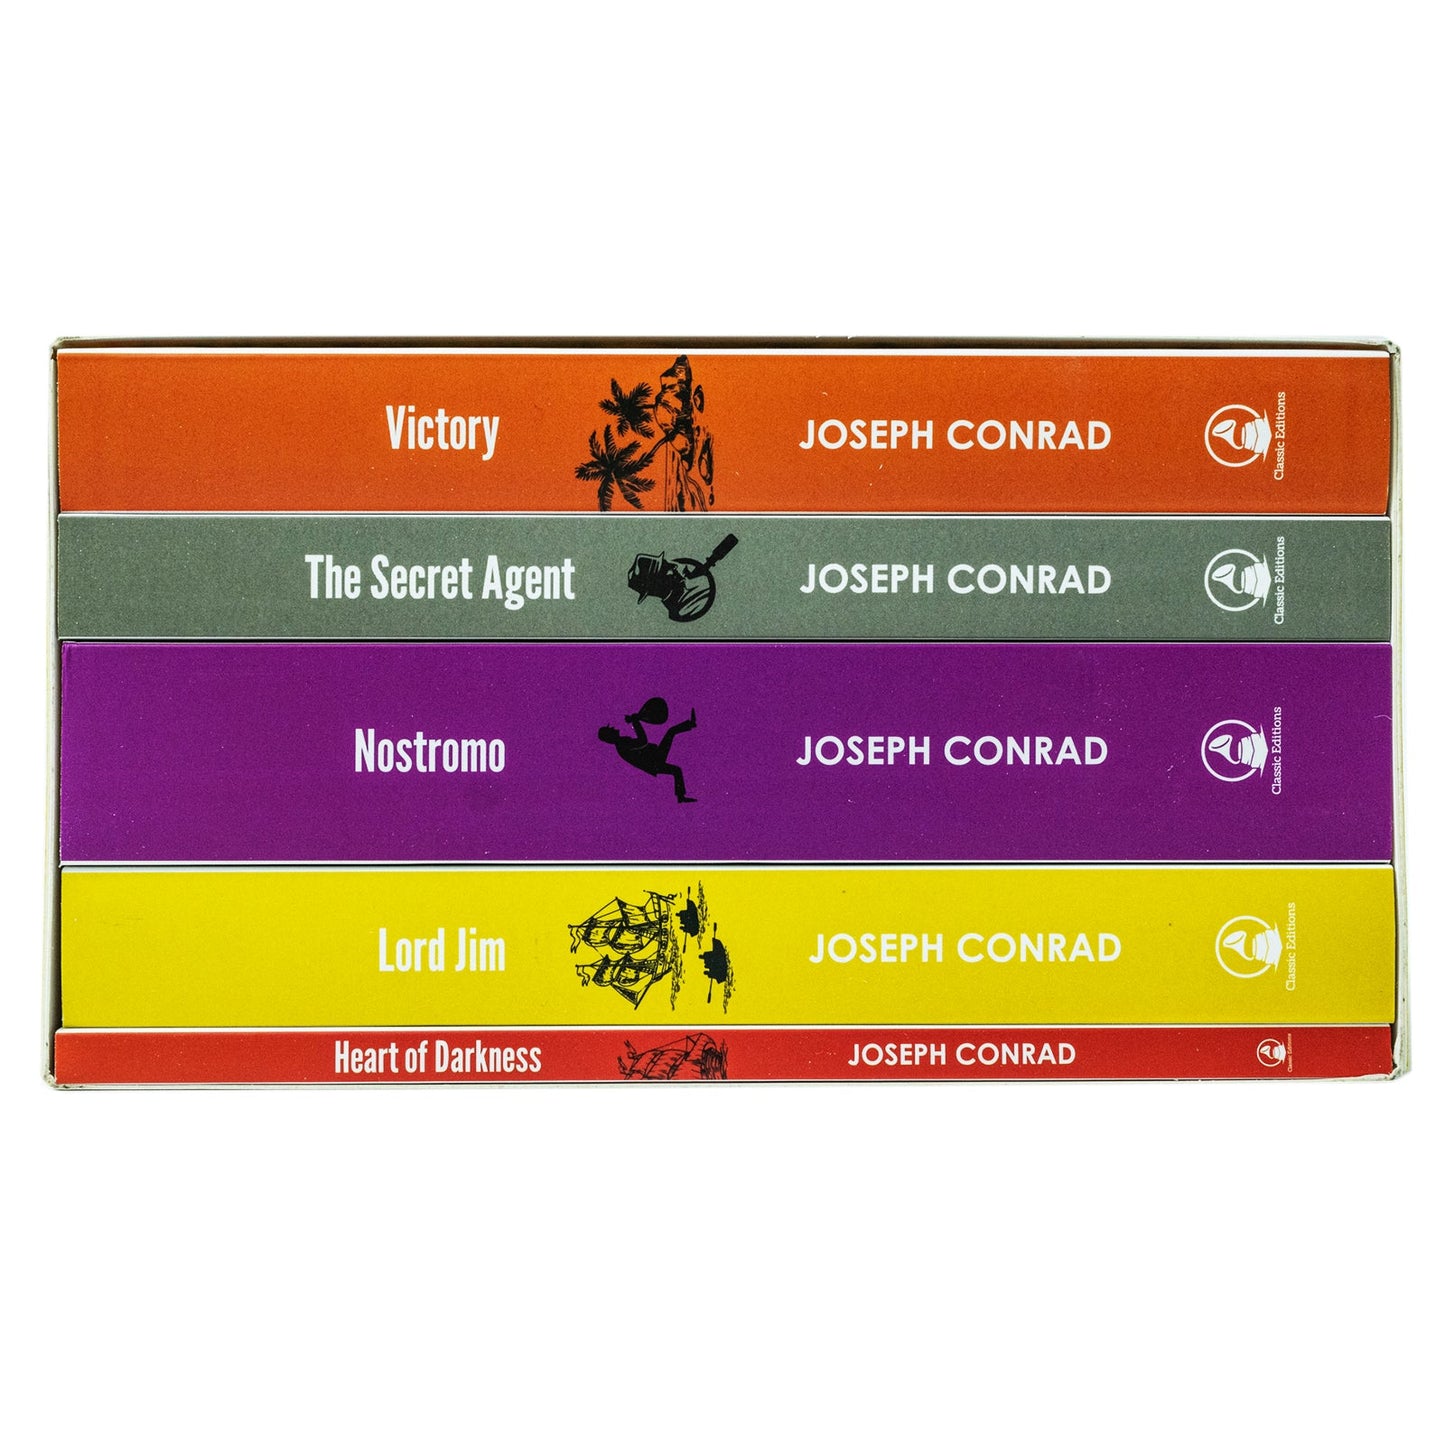 Joseph Conrad: The Complete Collection 5 Books Box Set (Victory, The Secret Agent, Nostromo, Lord Jim, Heart of Darkness)